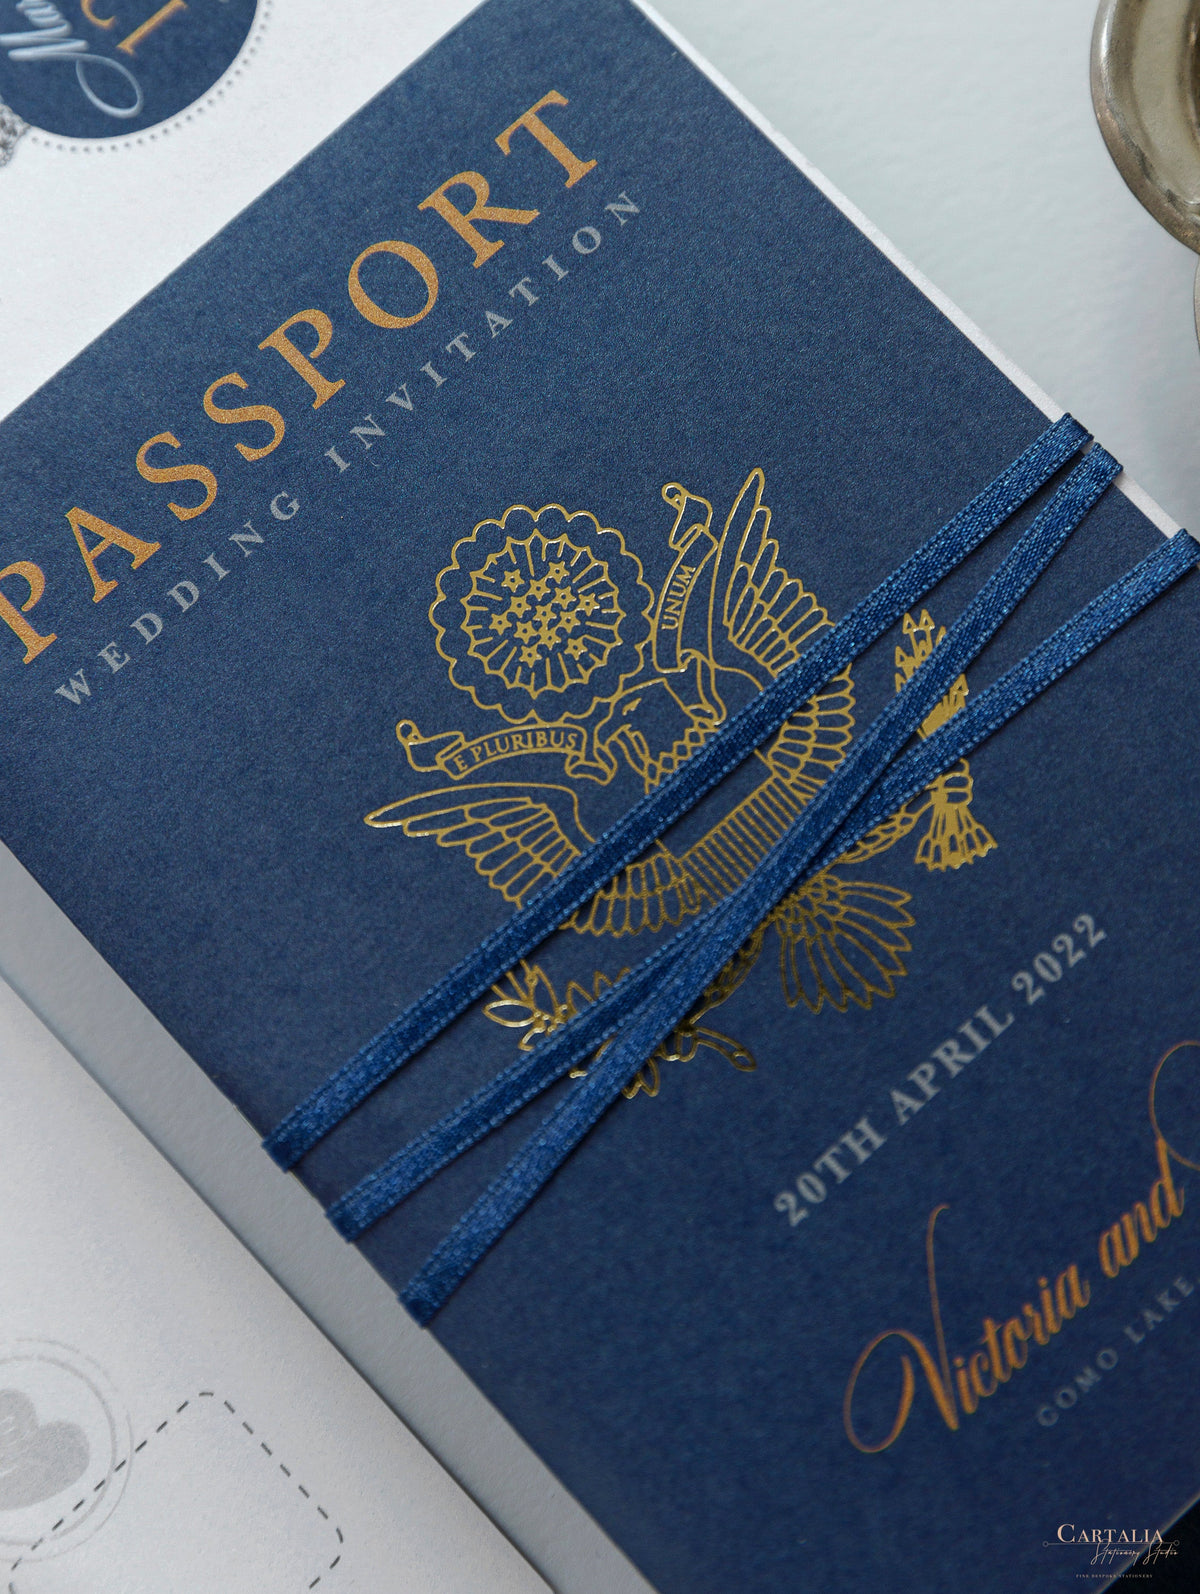 USA / American Passport Navy Wedding Invitation with Sinkmering Foil + Boarding Pass Style RSVP